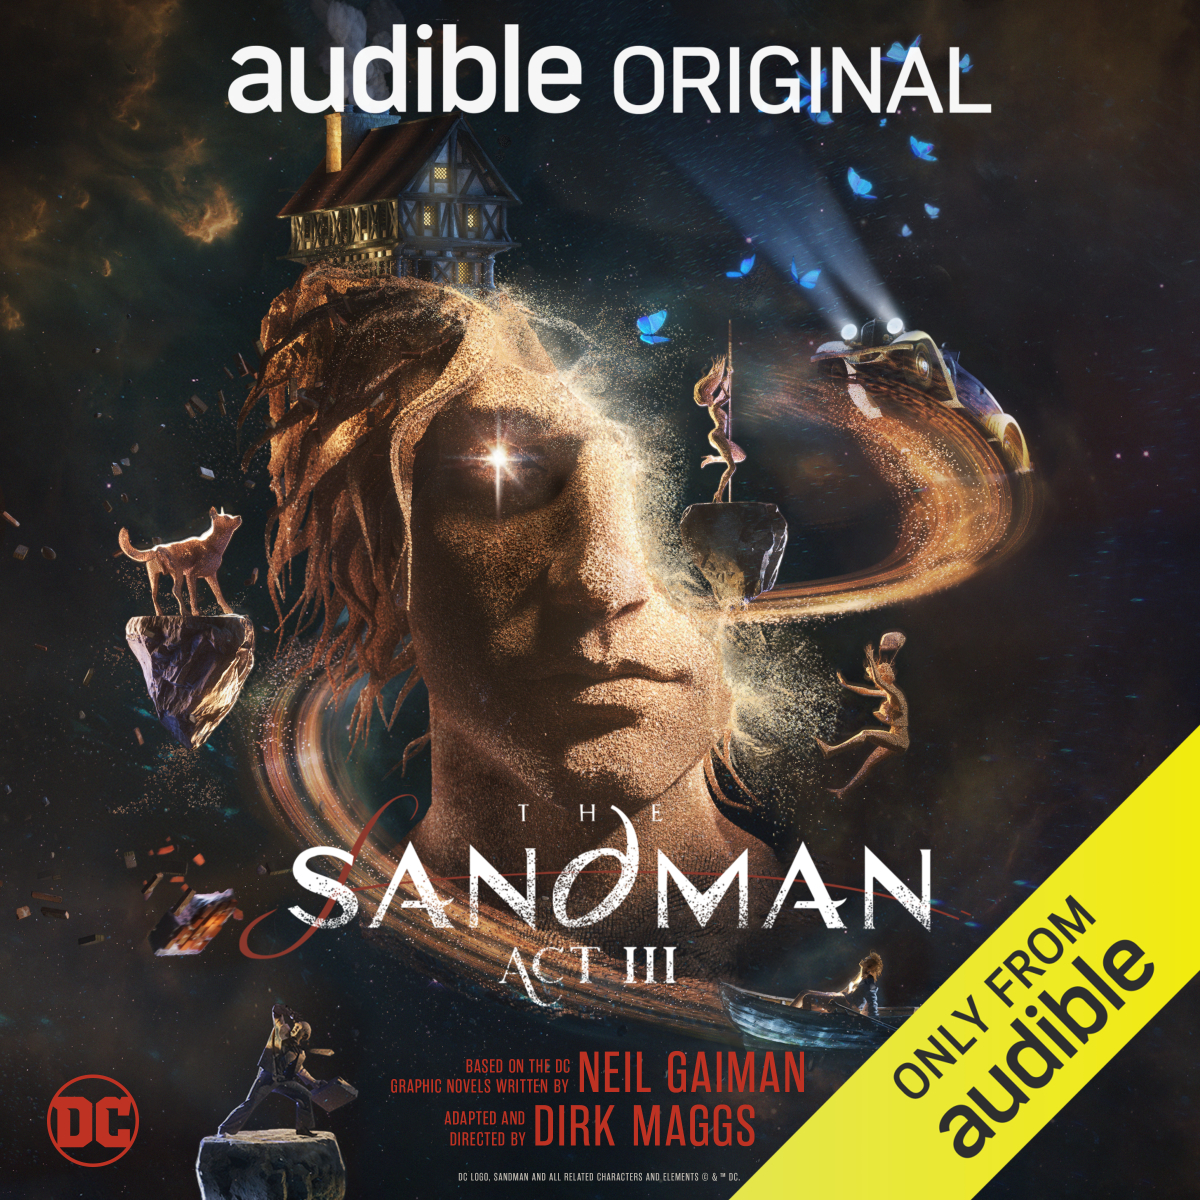 the-sandman-act-iii-audible-cover-art.png